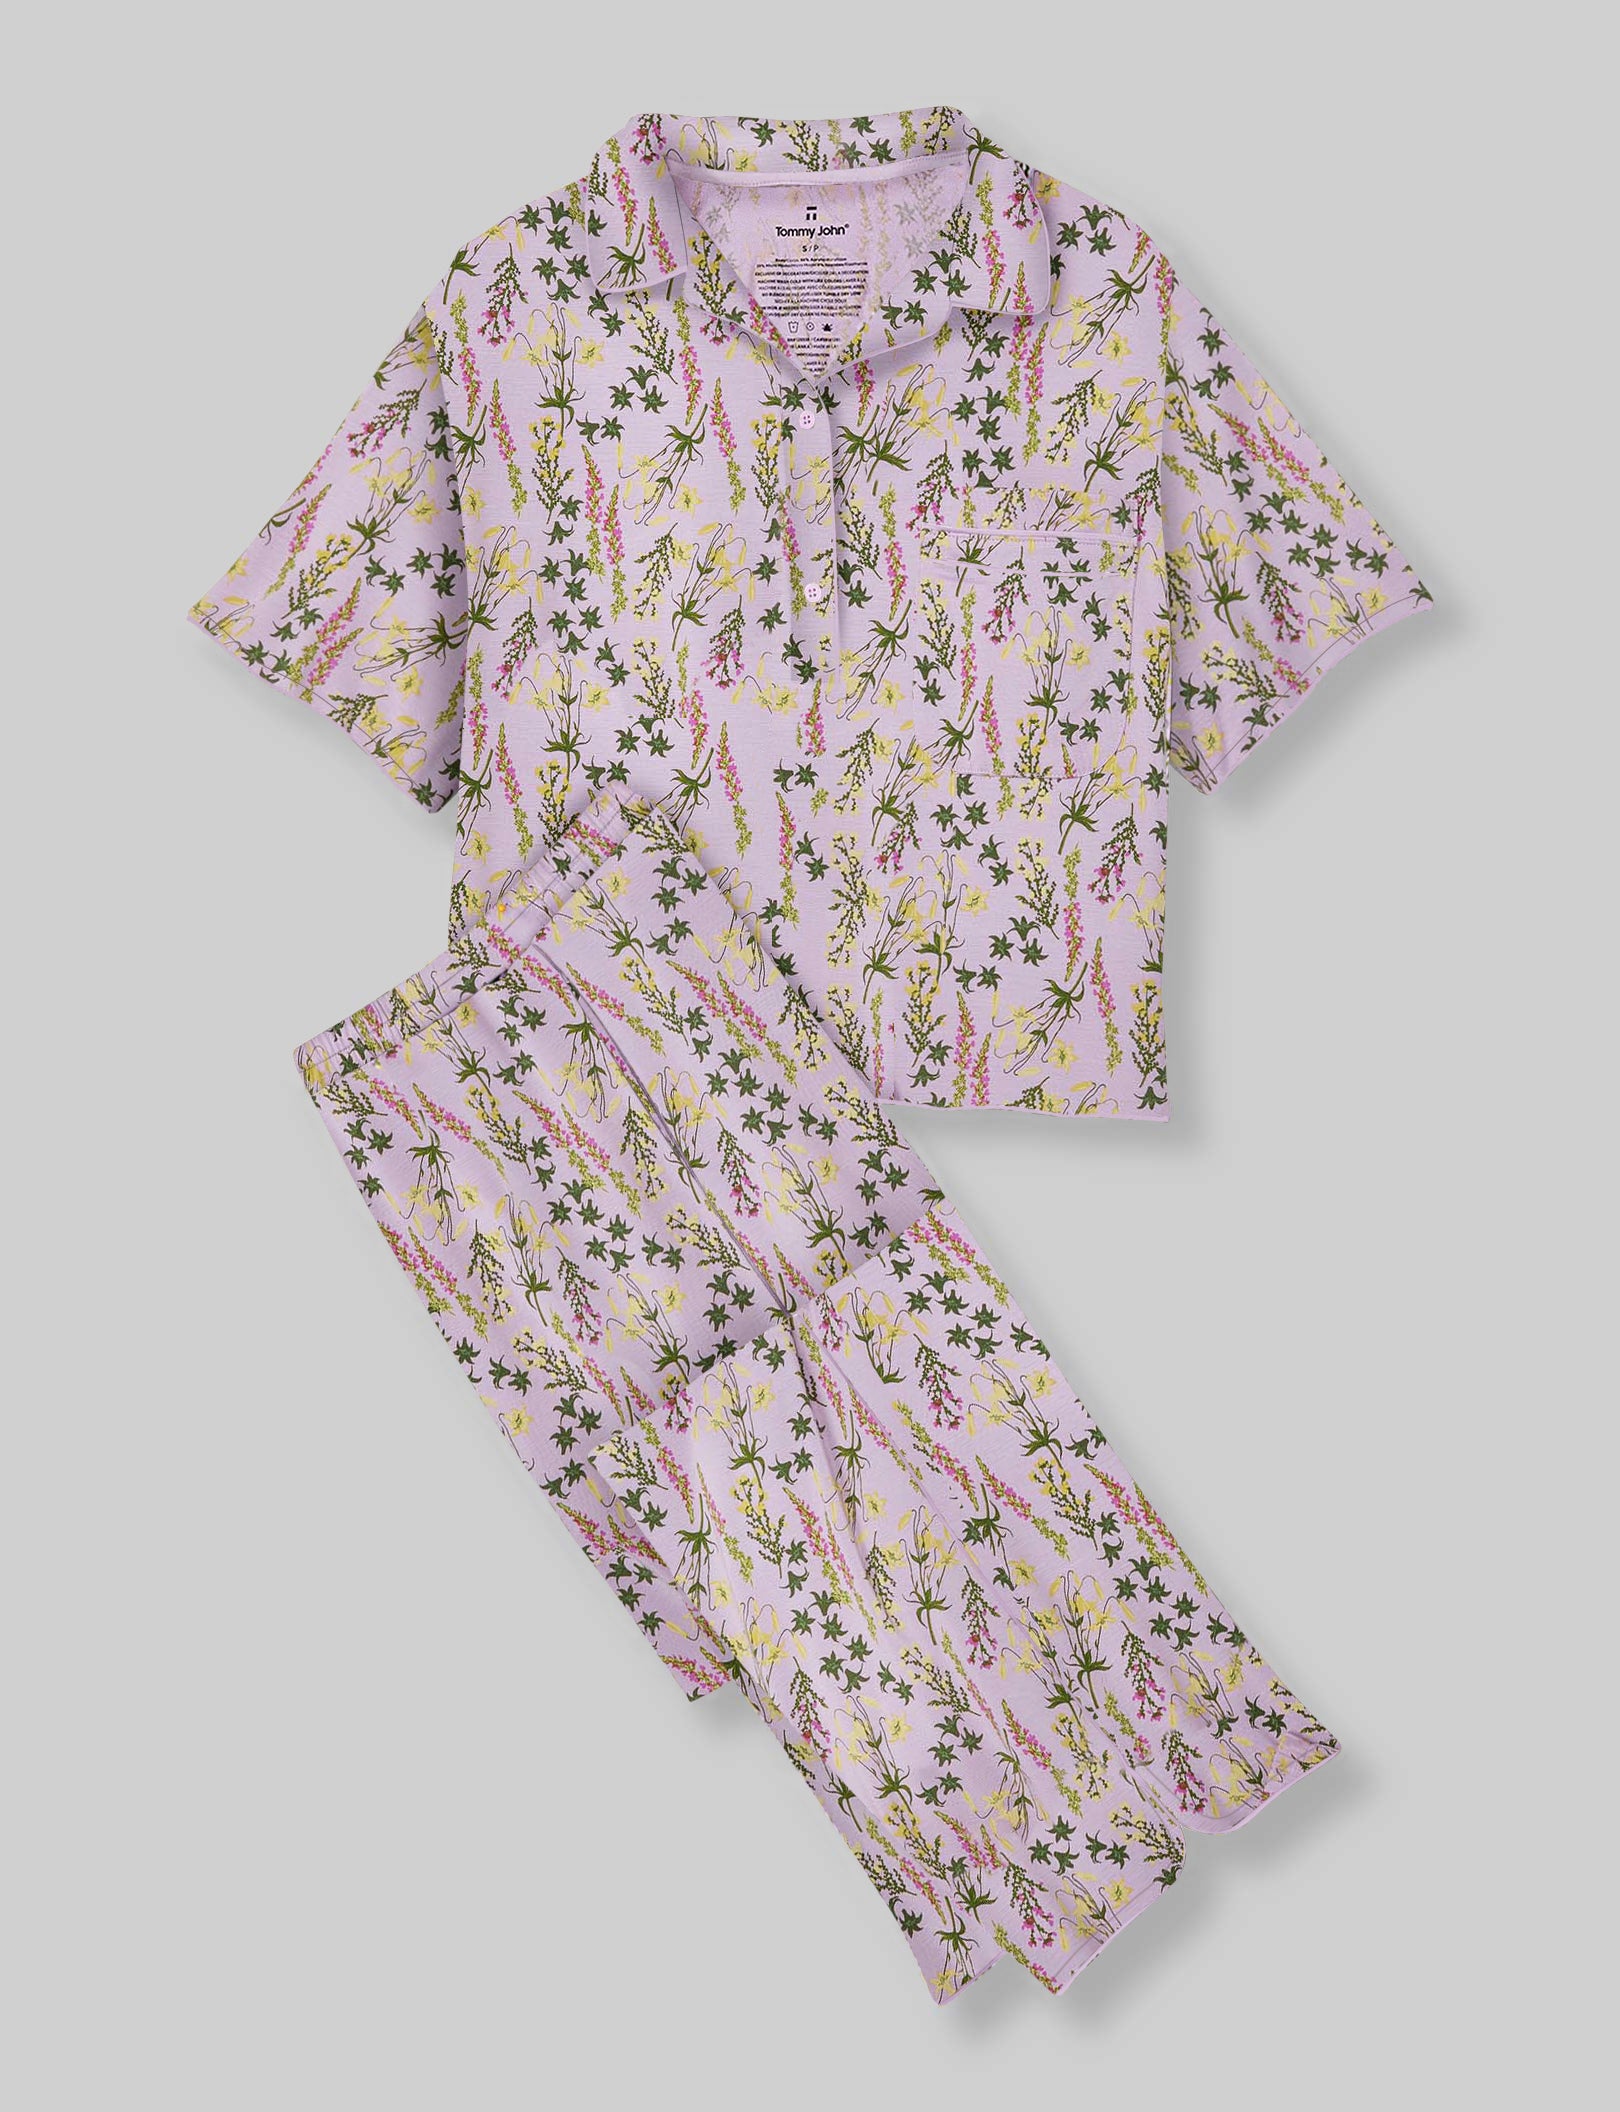 Women's Downtime Pajama Top & Pant Set – Tommy John